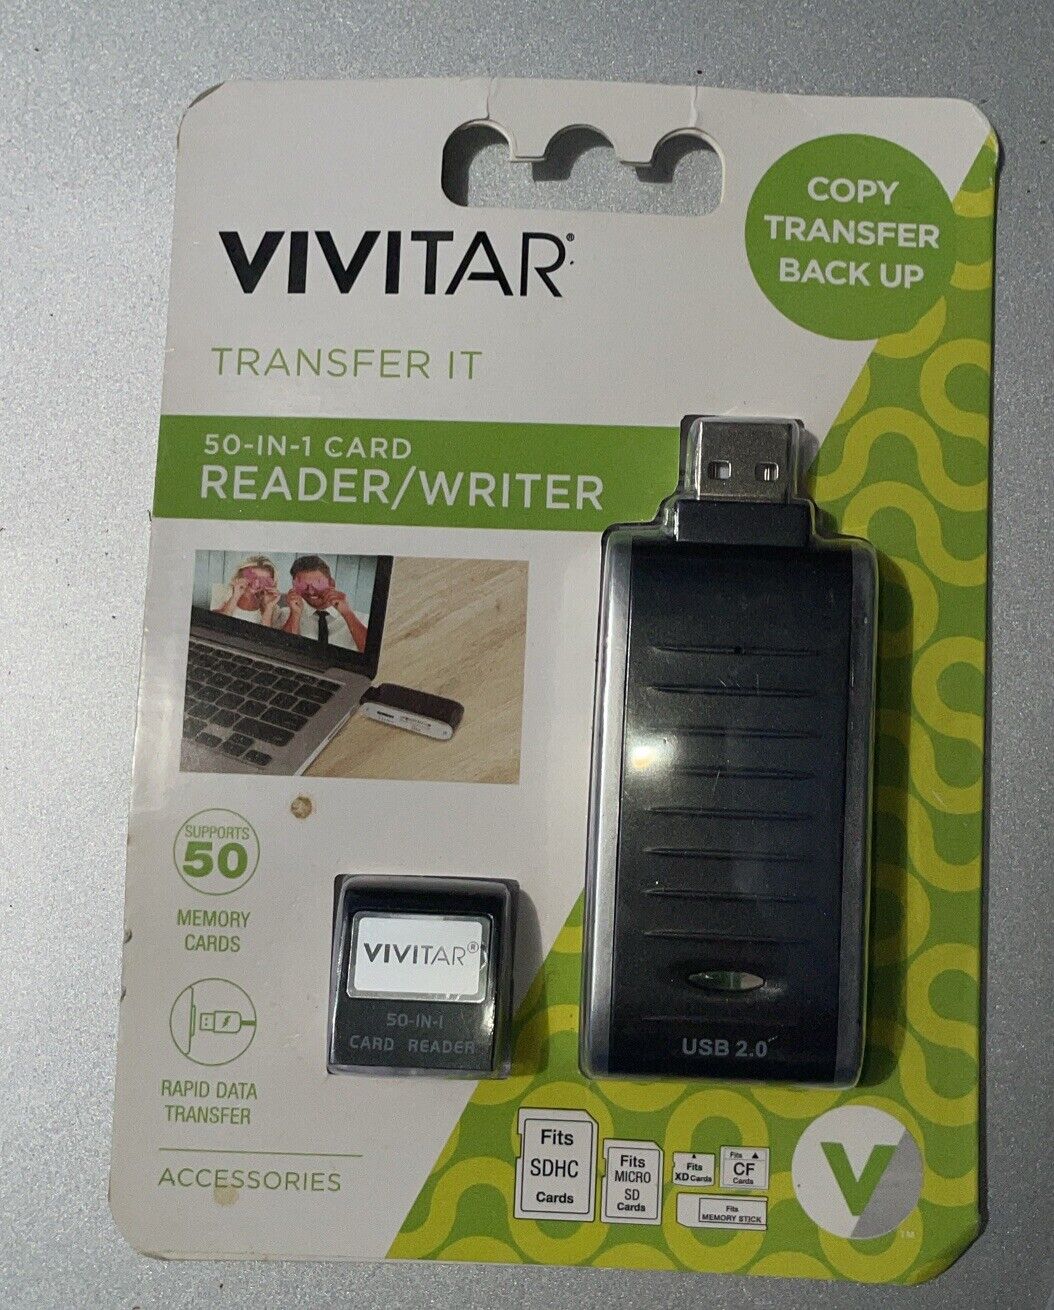 Vivitar VIV-RW-5000-BLK Reader 50-in-1 Card - Black (NEW)